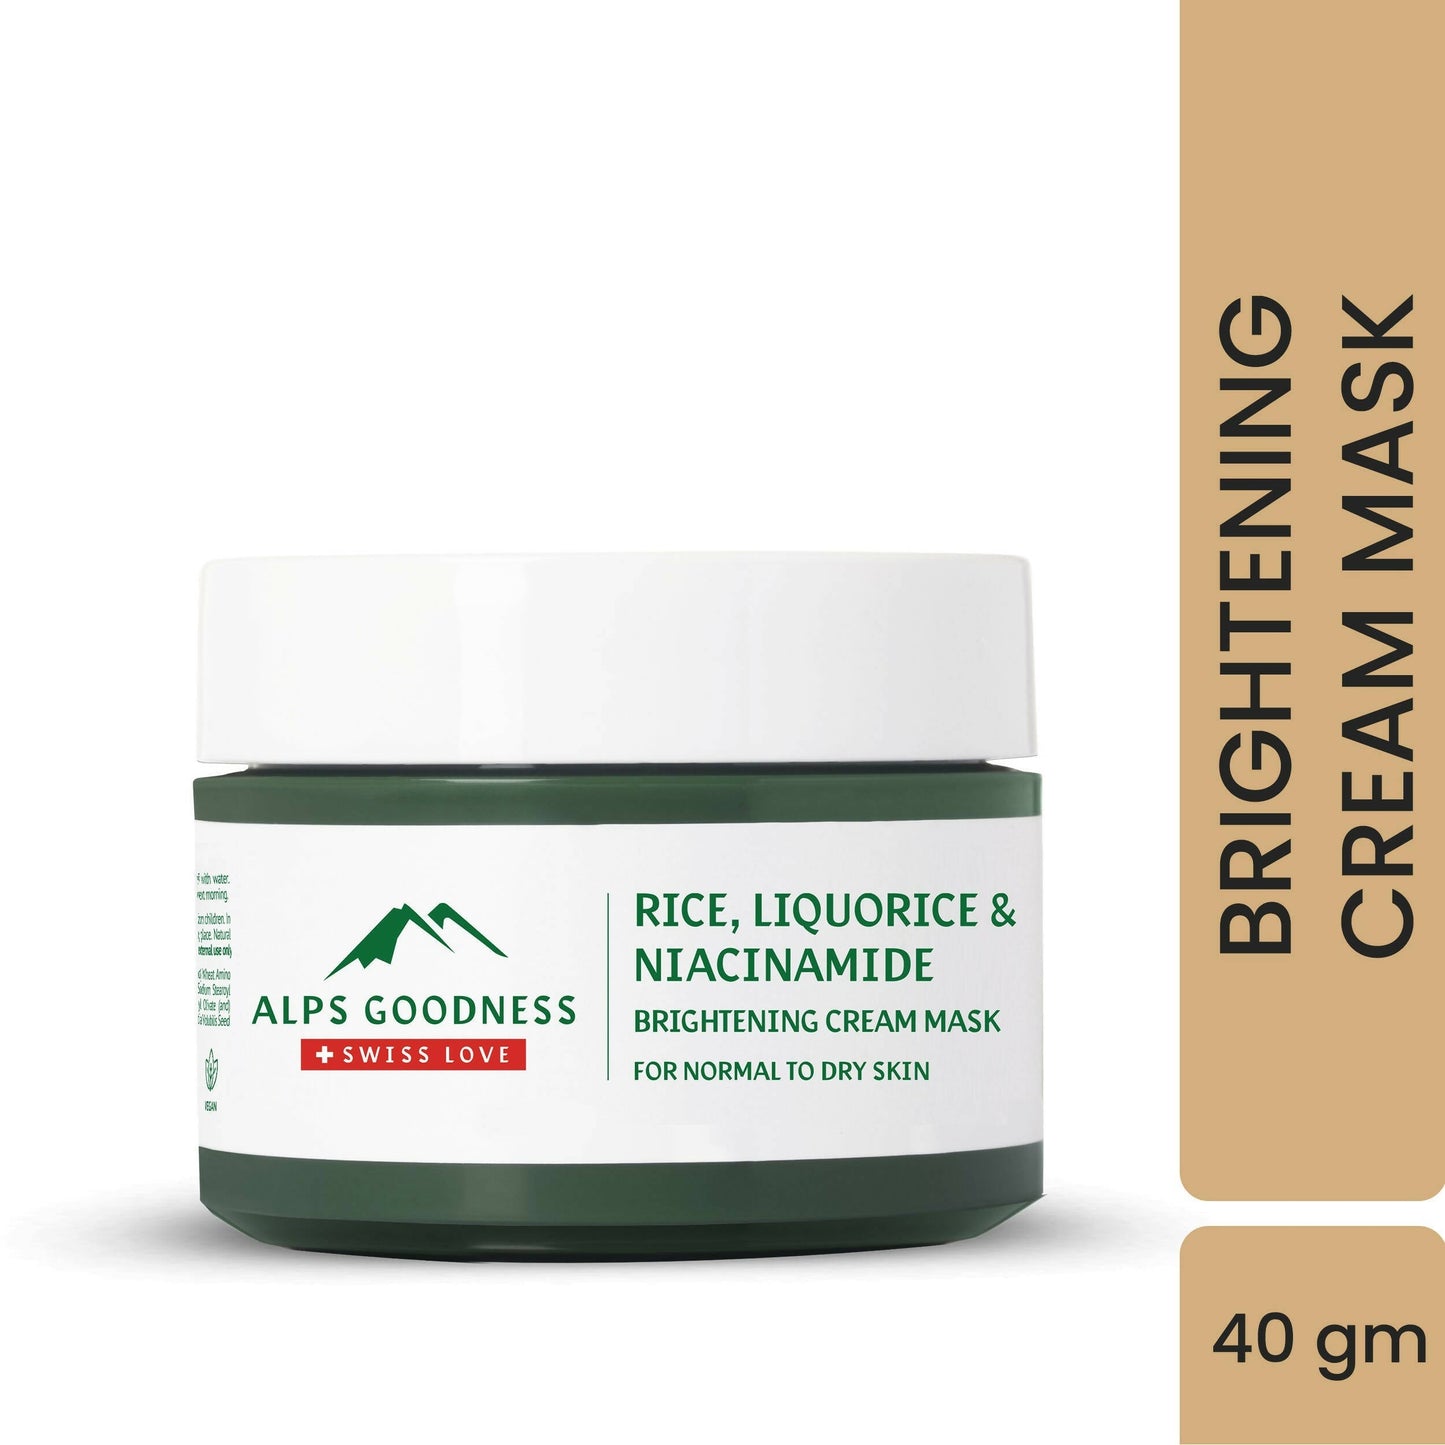 Alps Goodness Rice, Liquorice & Niacinamide Brightening Cream Mask